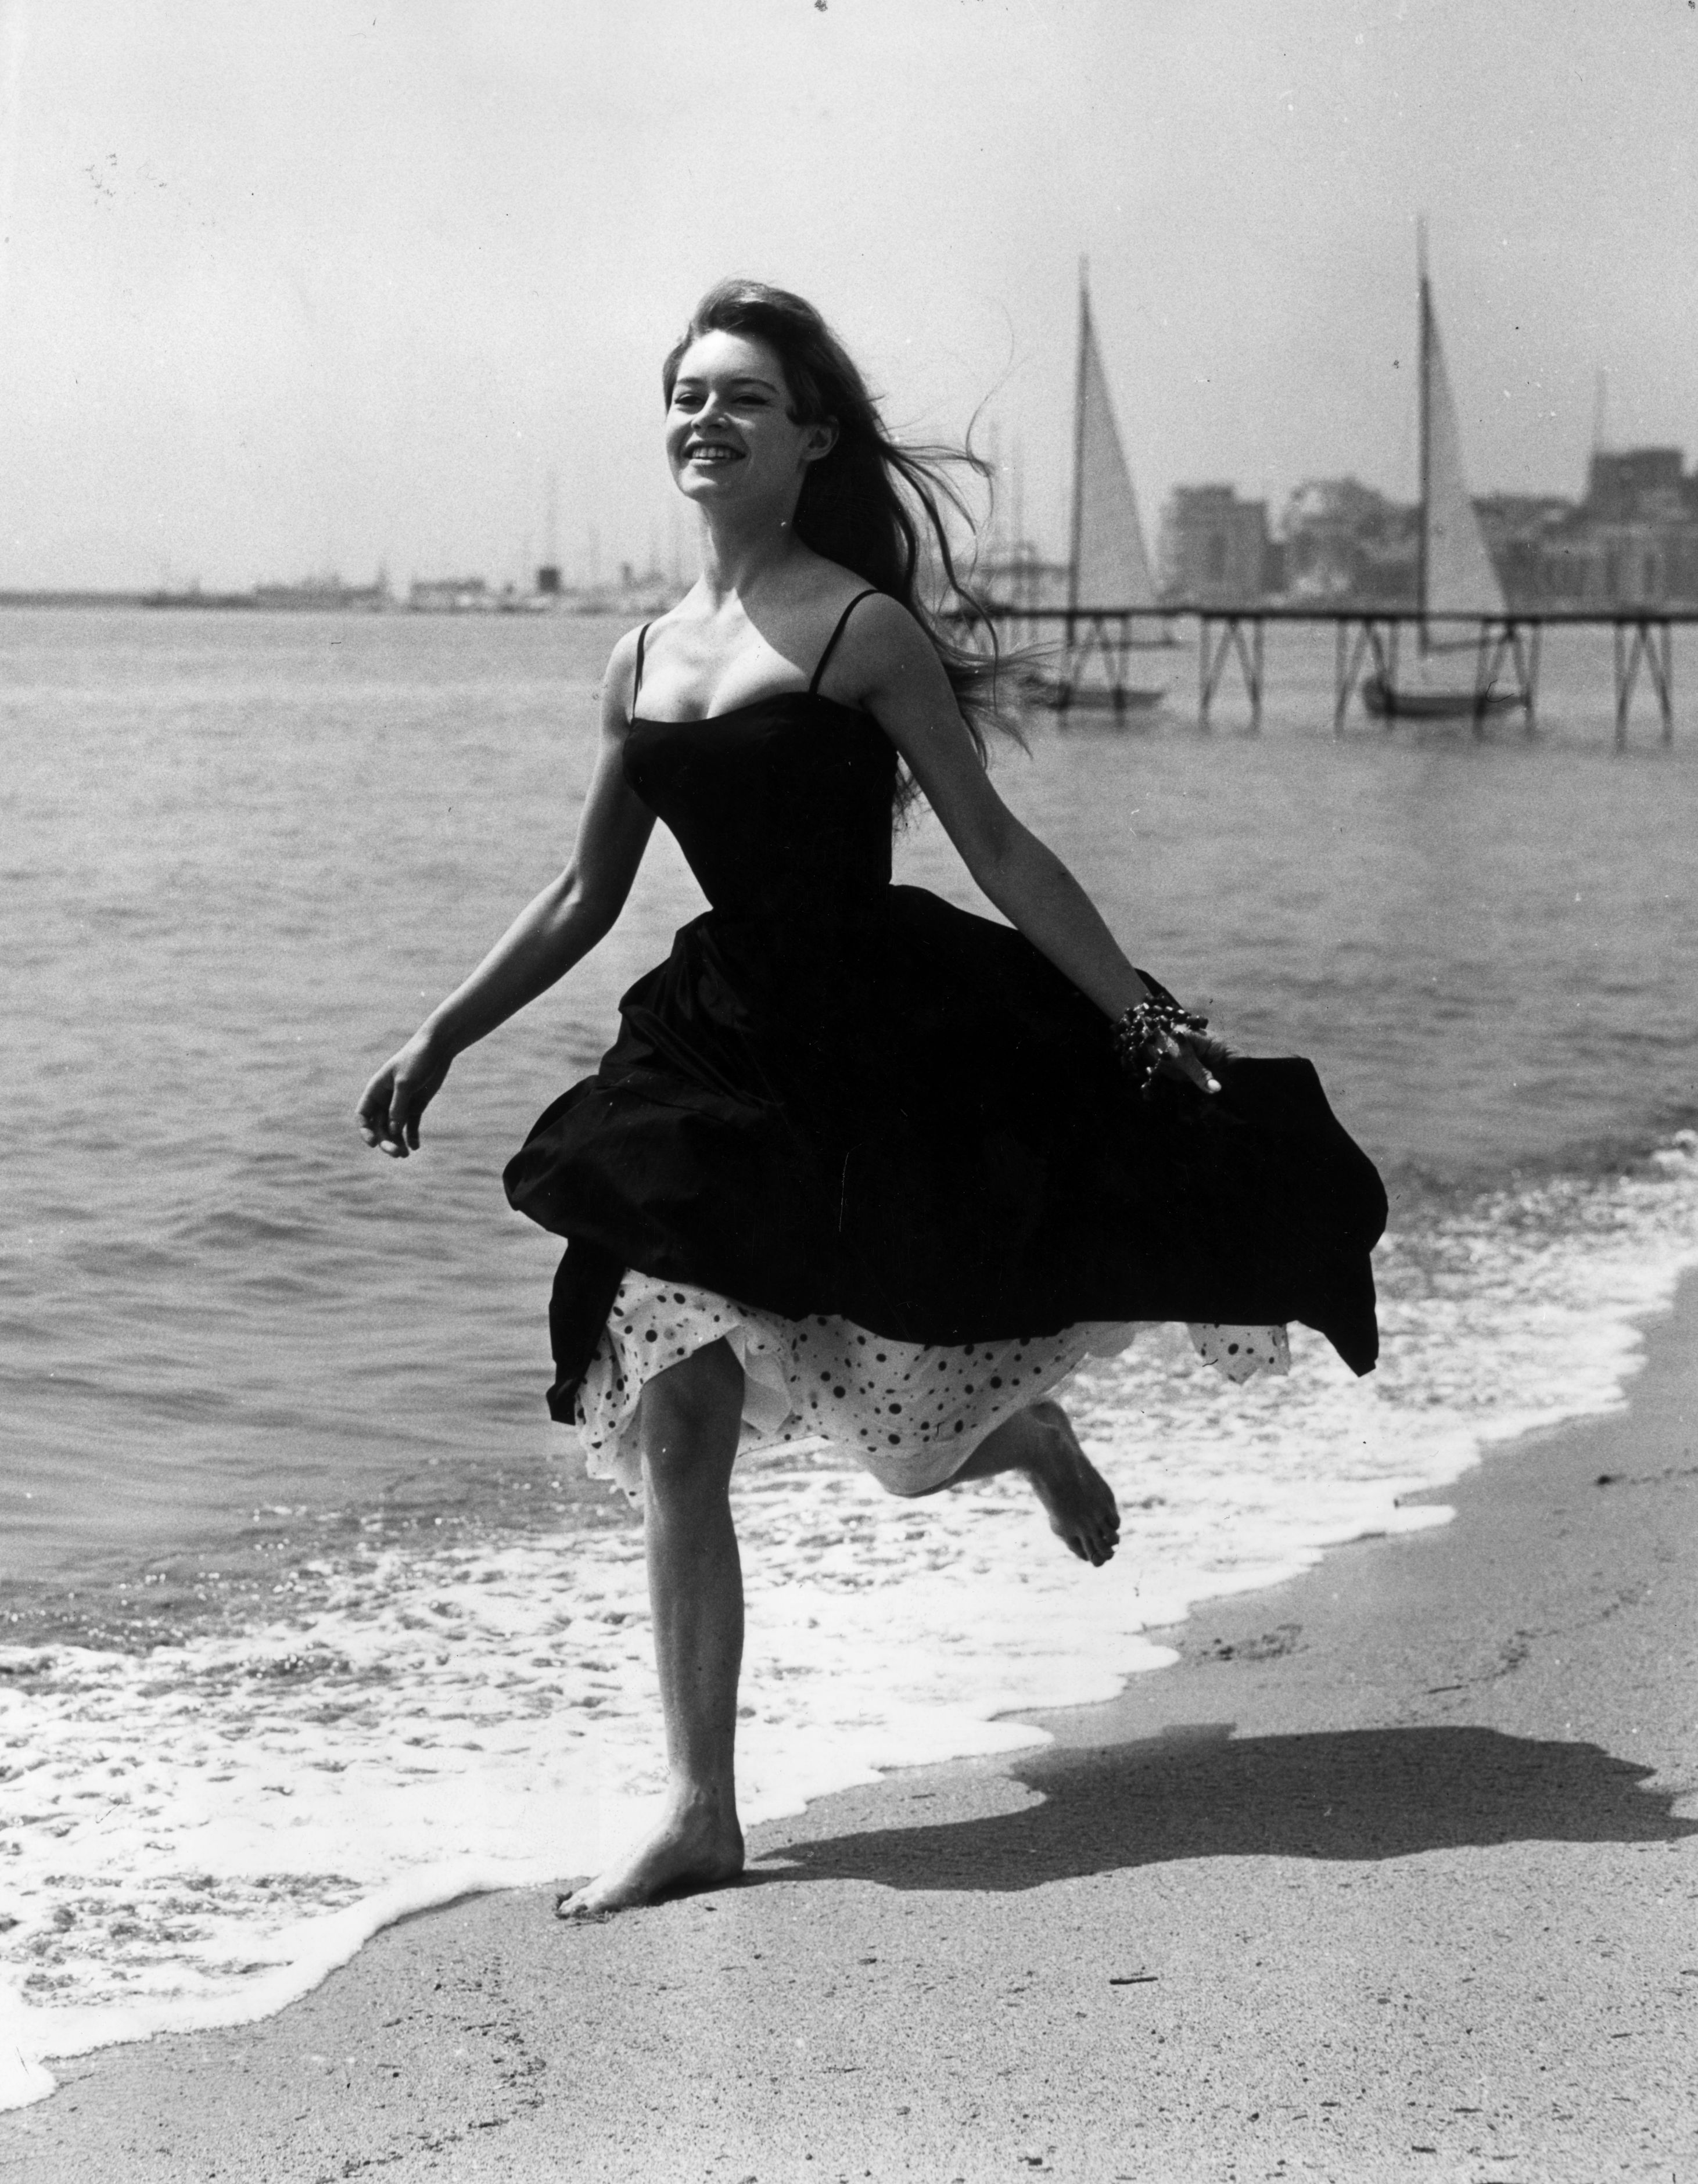 brigitte bardot runs on the beach wearingb a midi dress at the cannes film festival